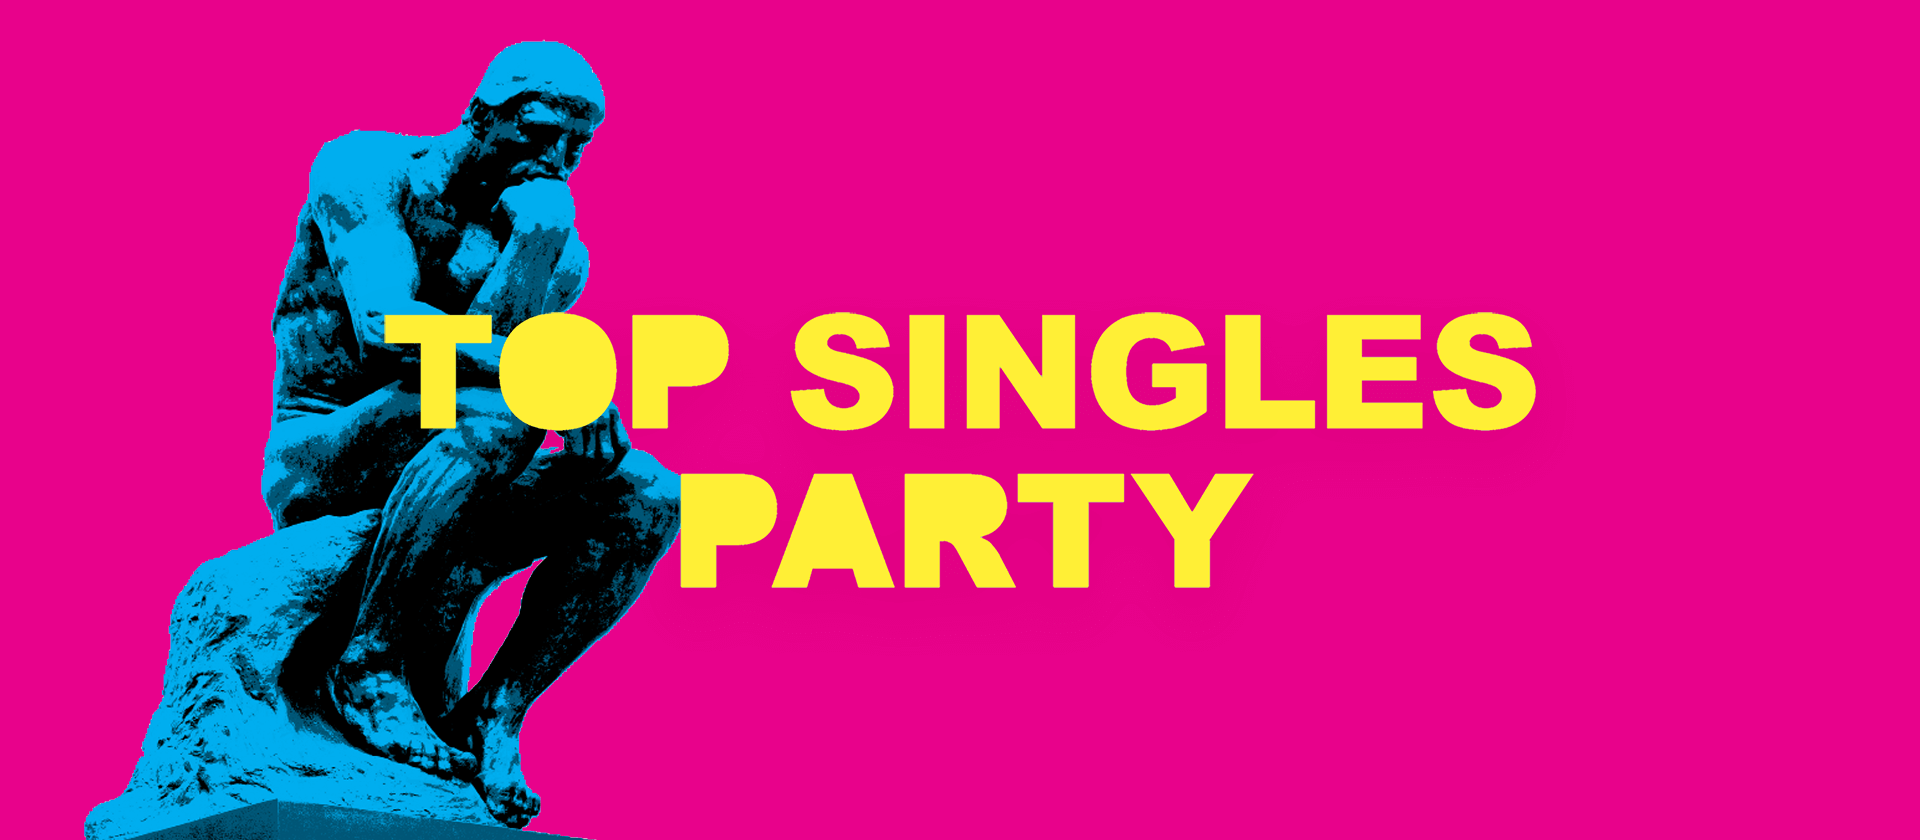 Top Singles Party 2016 Baltimore Magazine